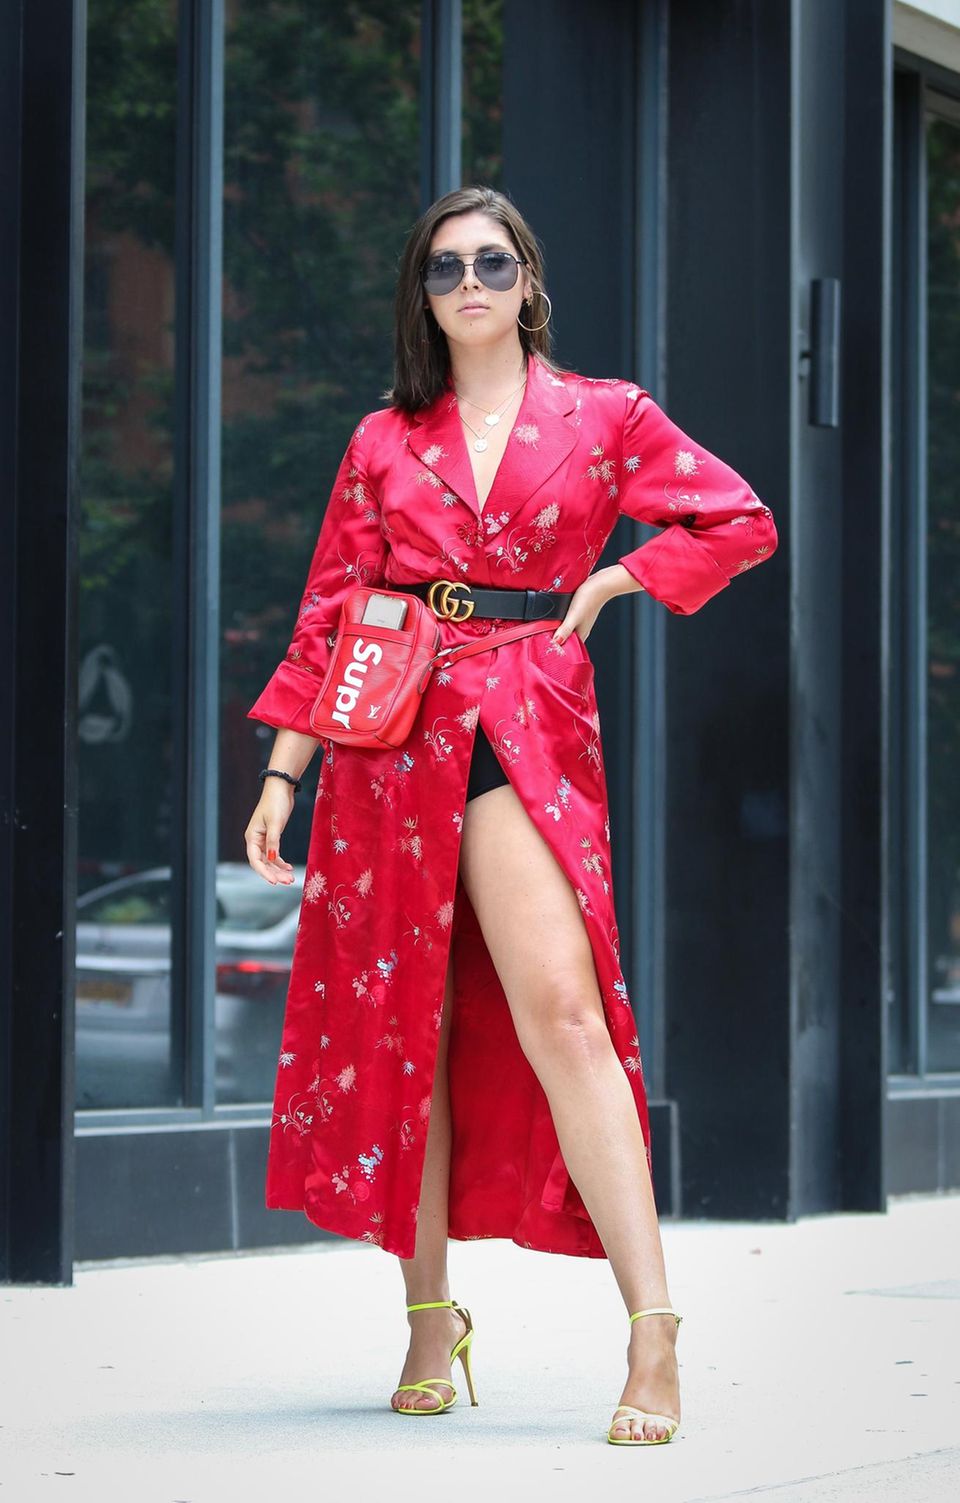 New York Fashion Week 2019: Frau mit rotem Kimono